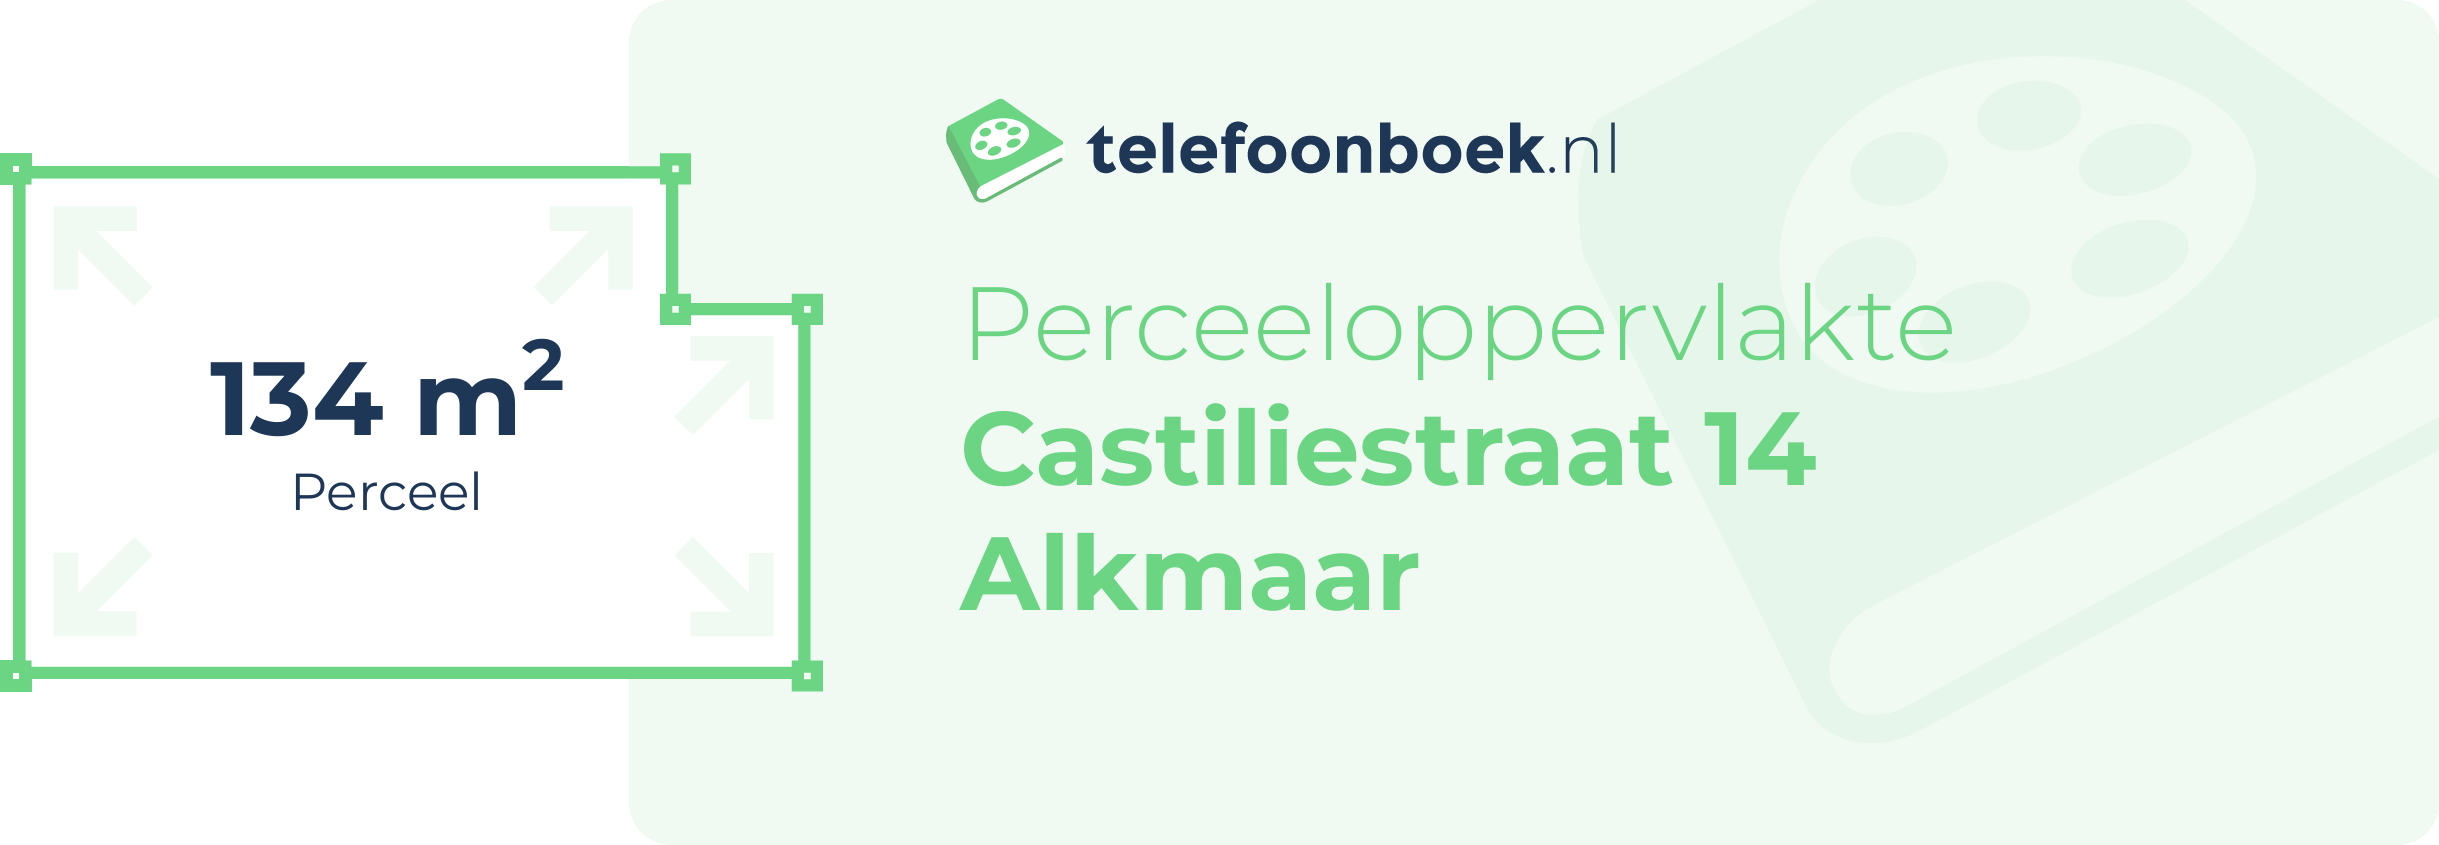 Perceeloppervlakte Castiliestraat 14 Alkmaar